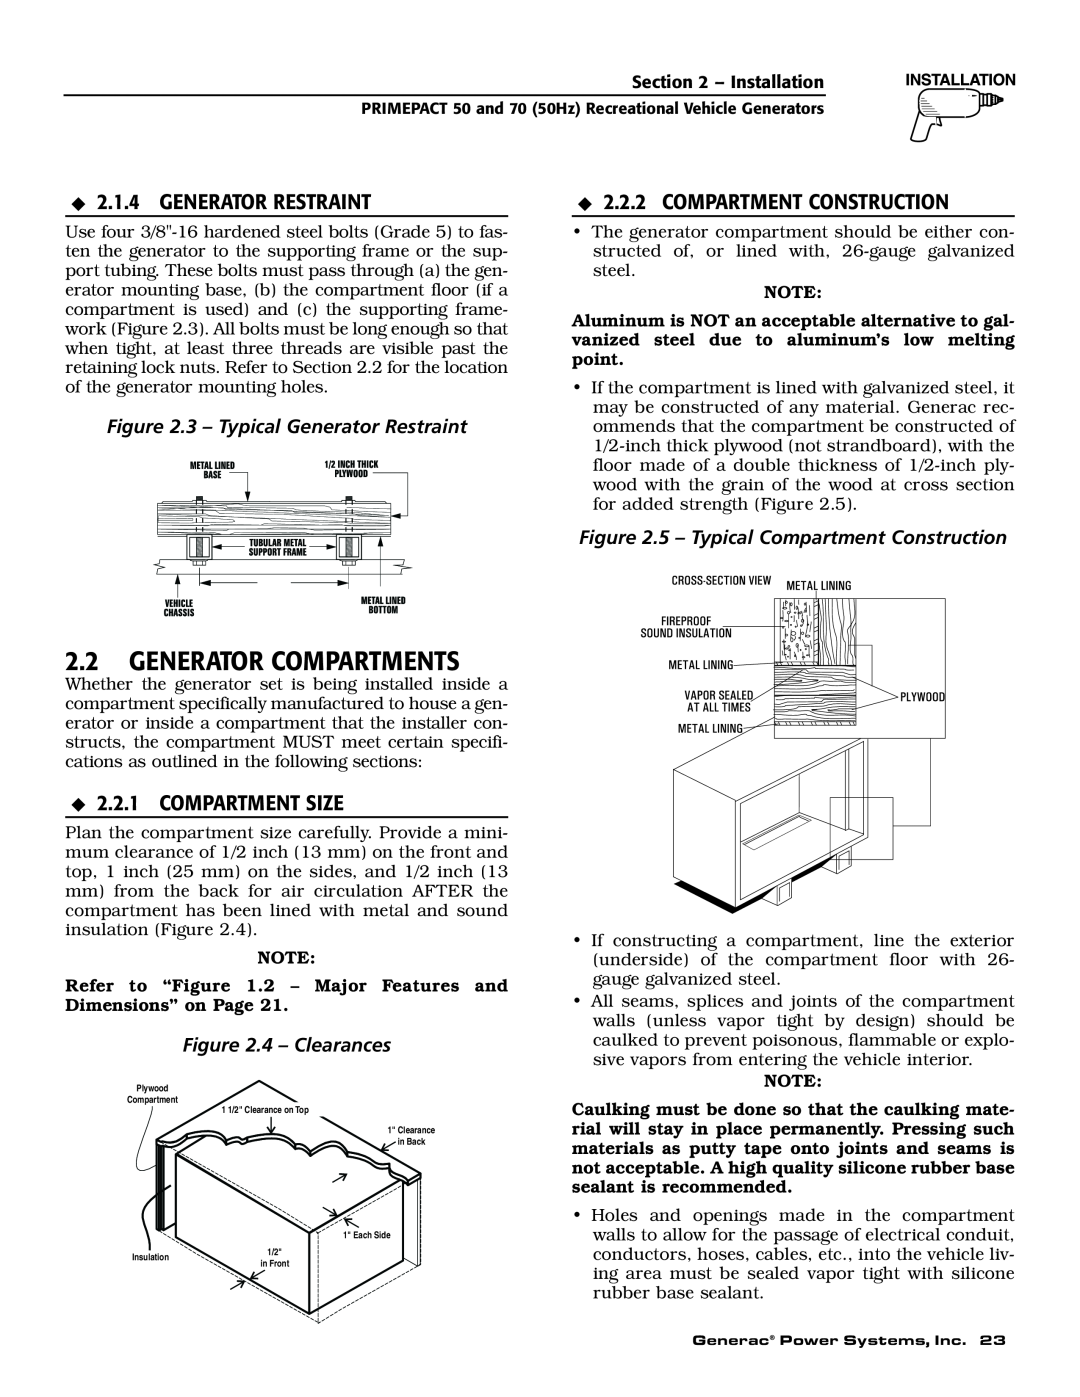 Generac 00784-2, 09290-4 Generator Compartments, Generator Restraint, Compartment Construction, Compartment Size 